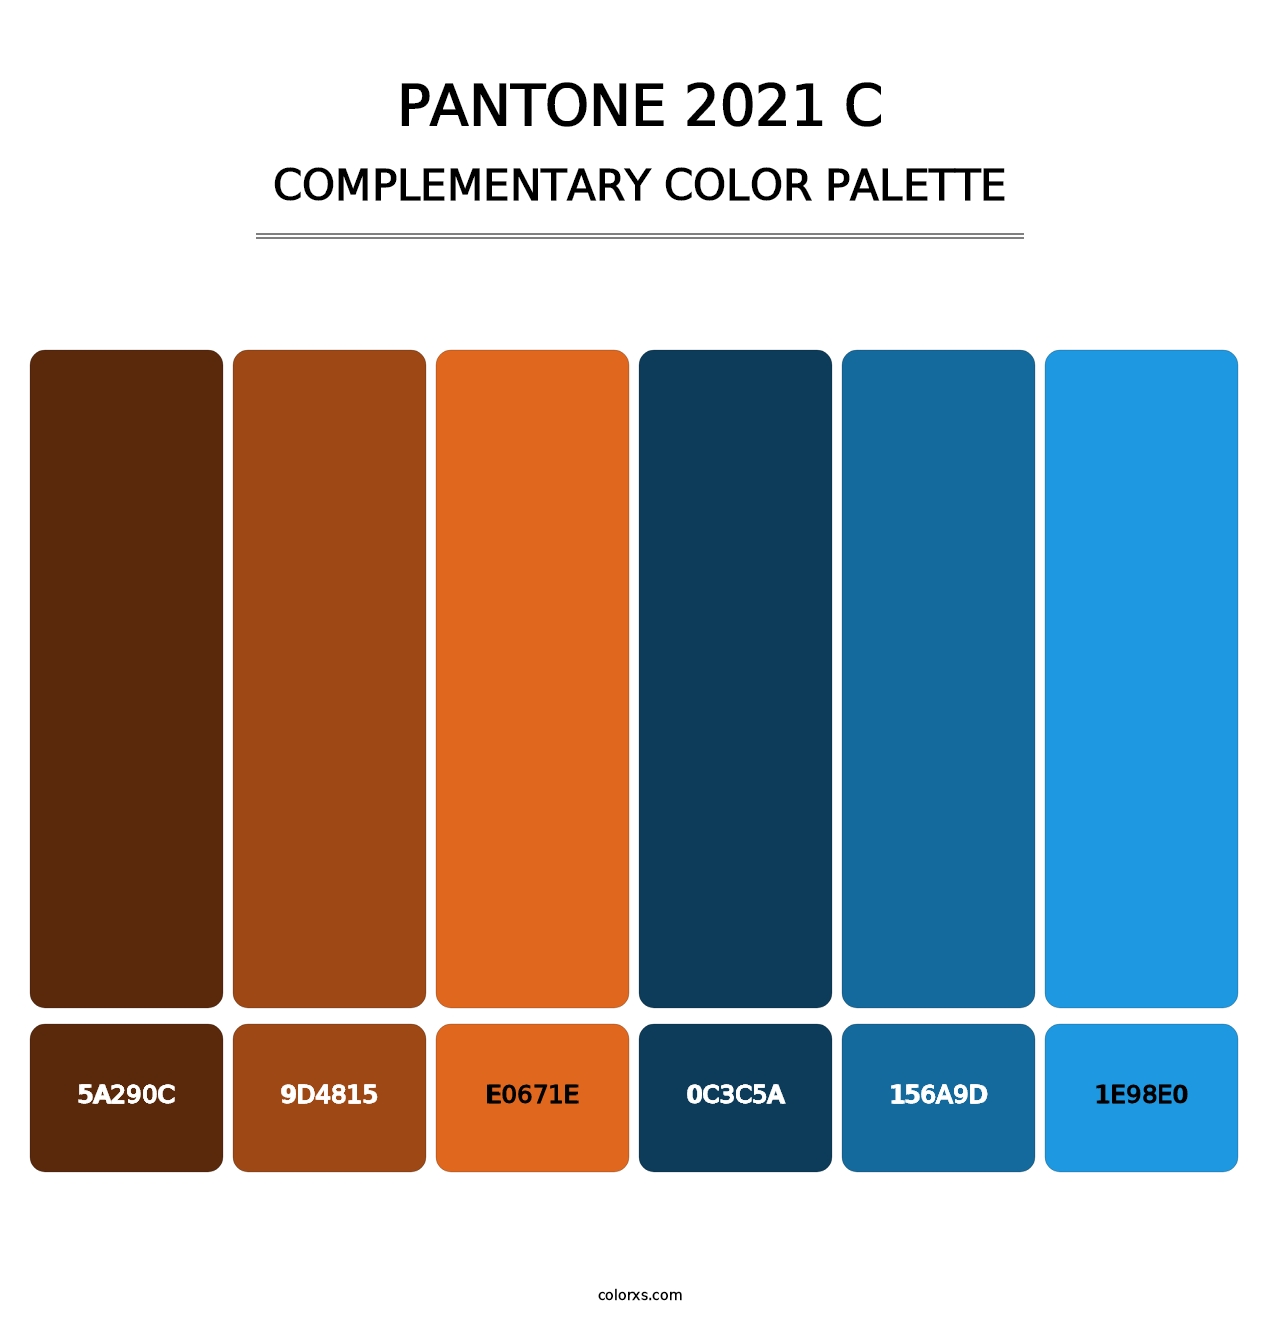 PANTONE 2021 C - Complementary Color Palette